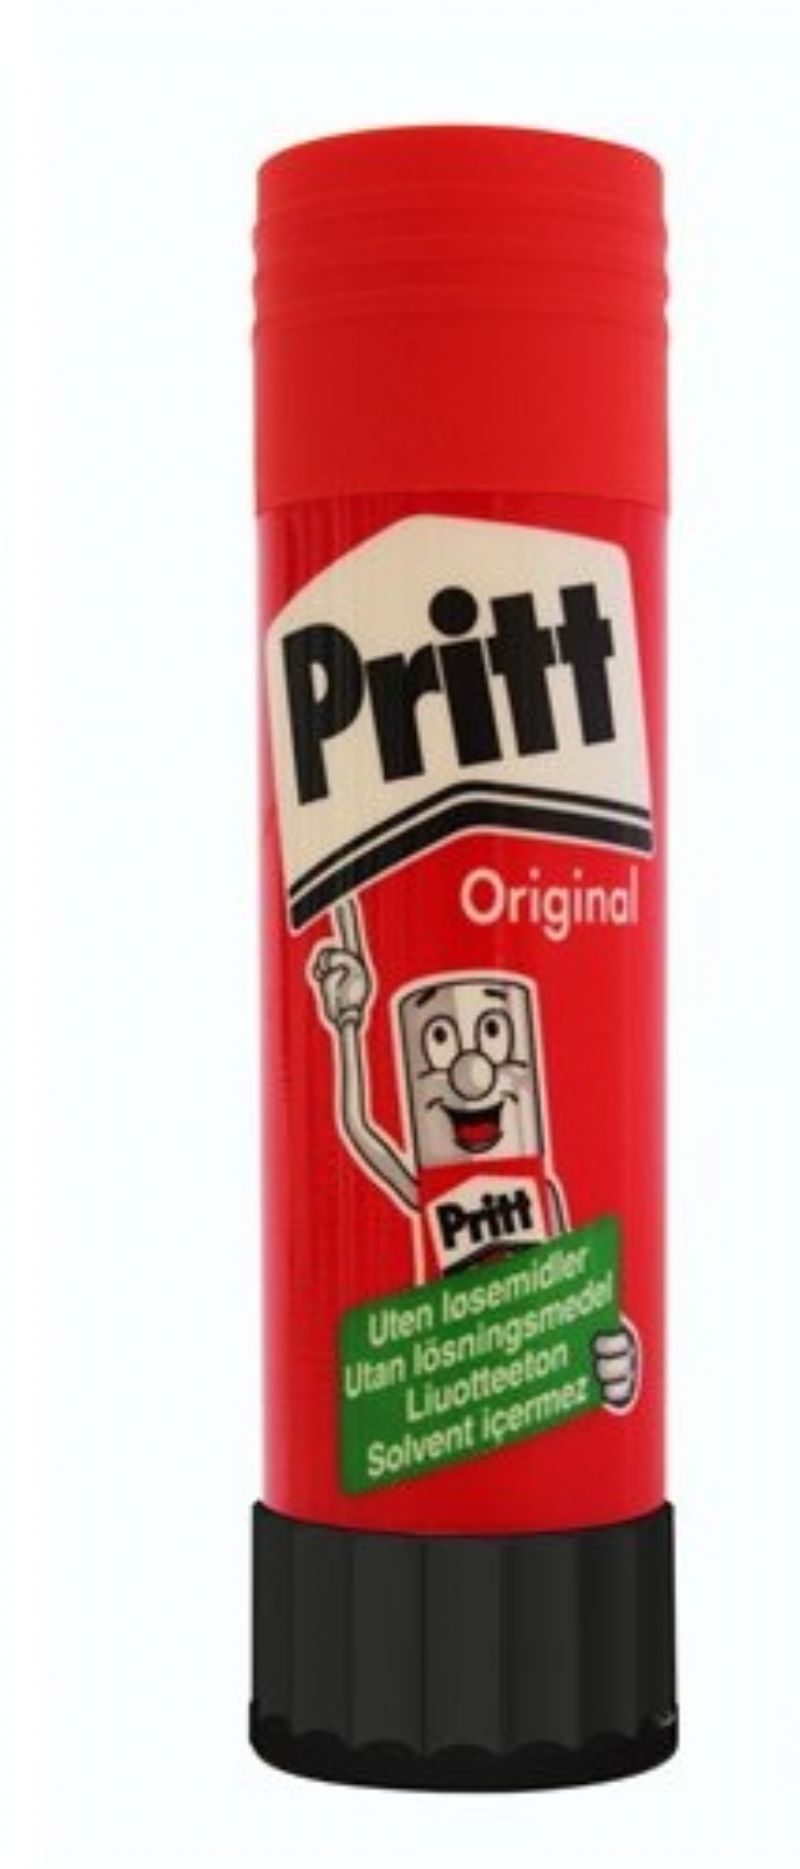 Pritt Stick Yaptrc 43 gr. 4015000090940